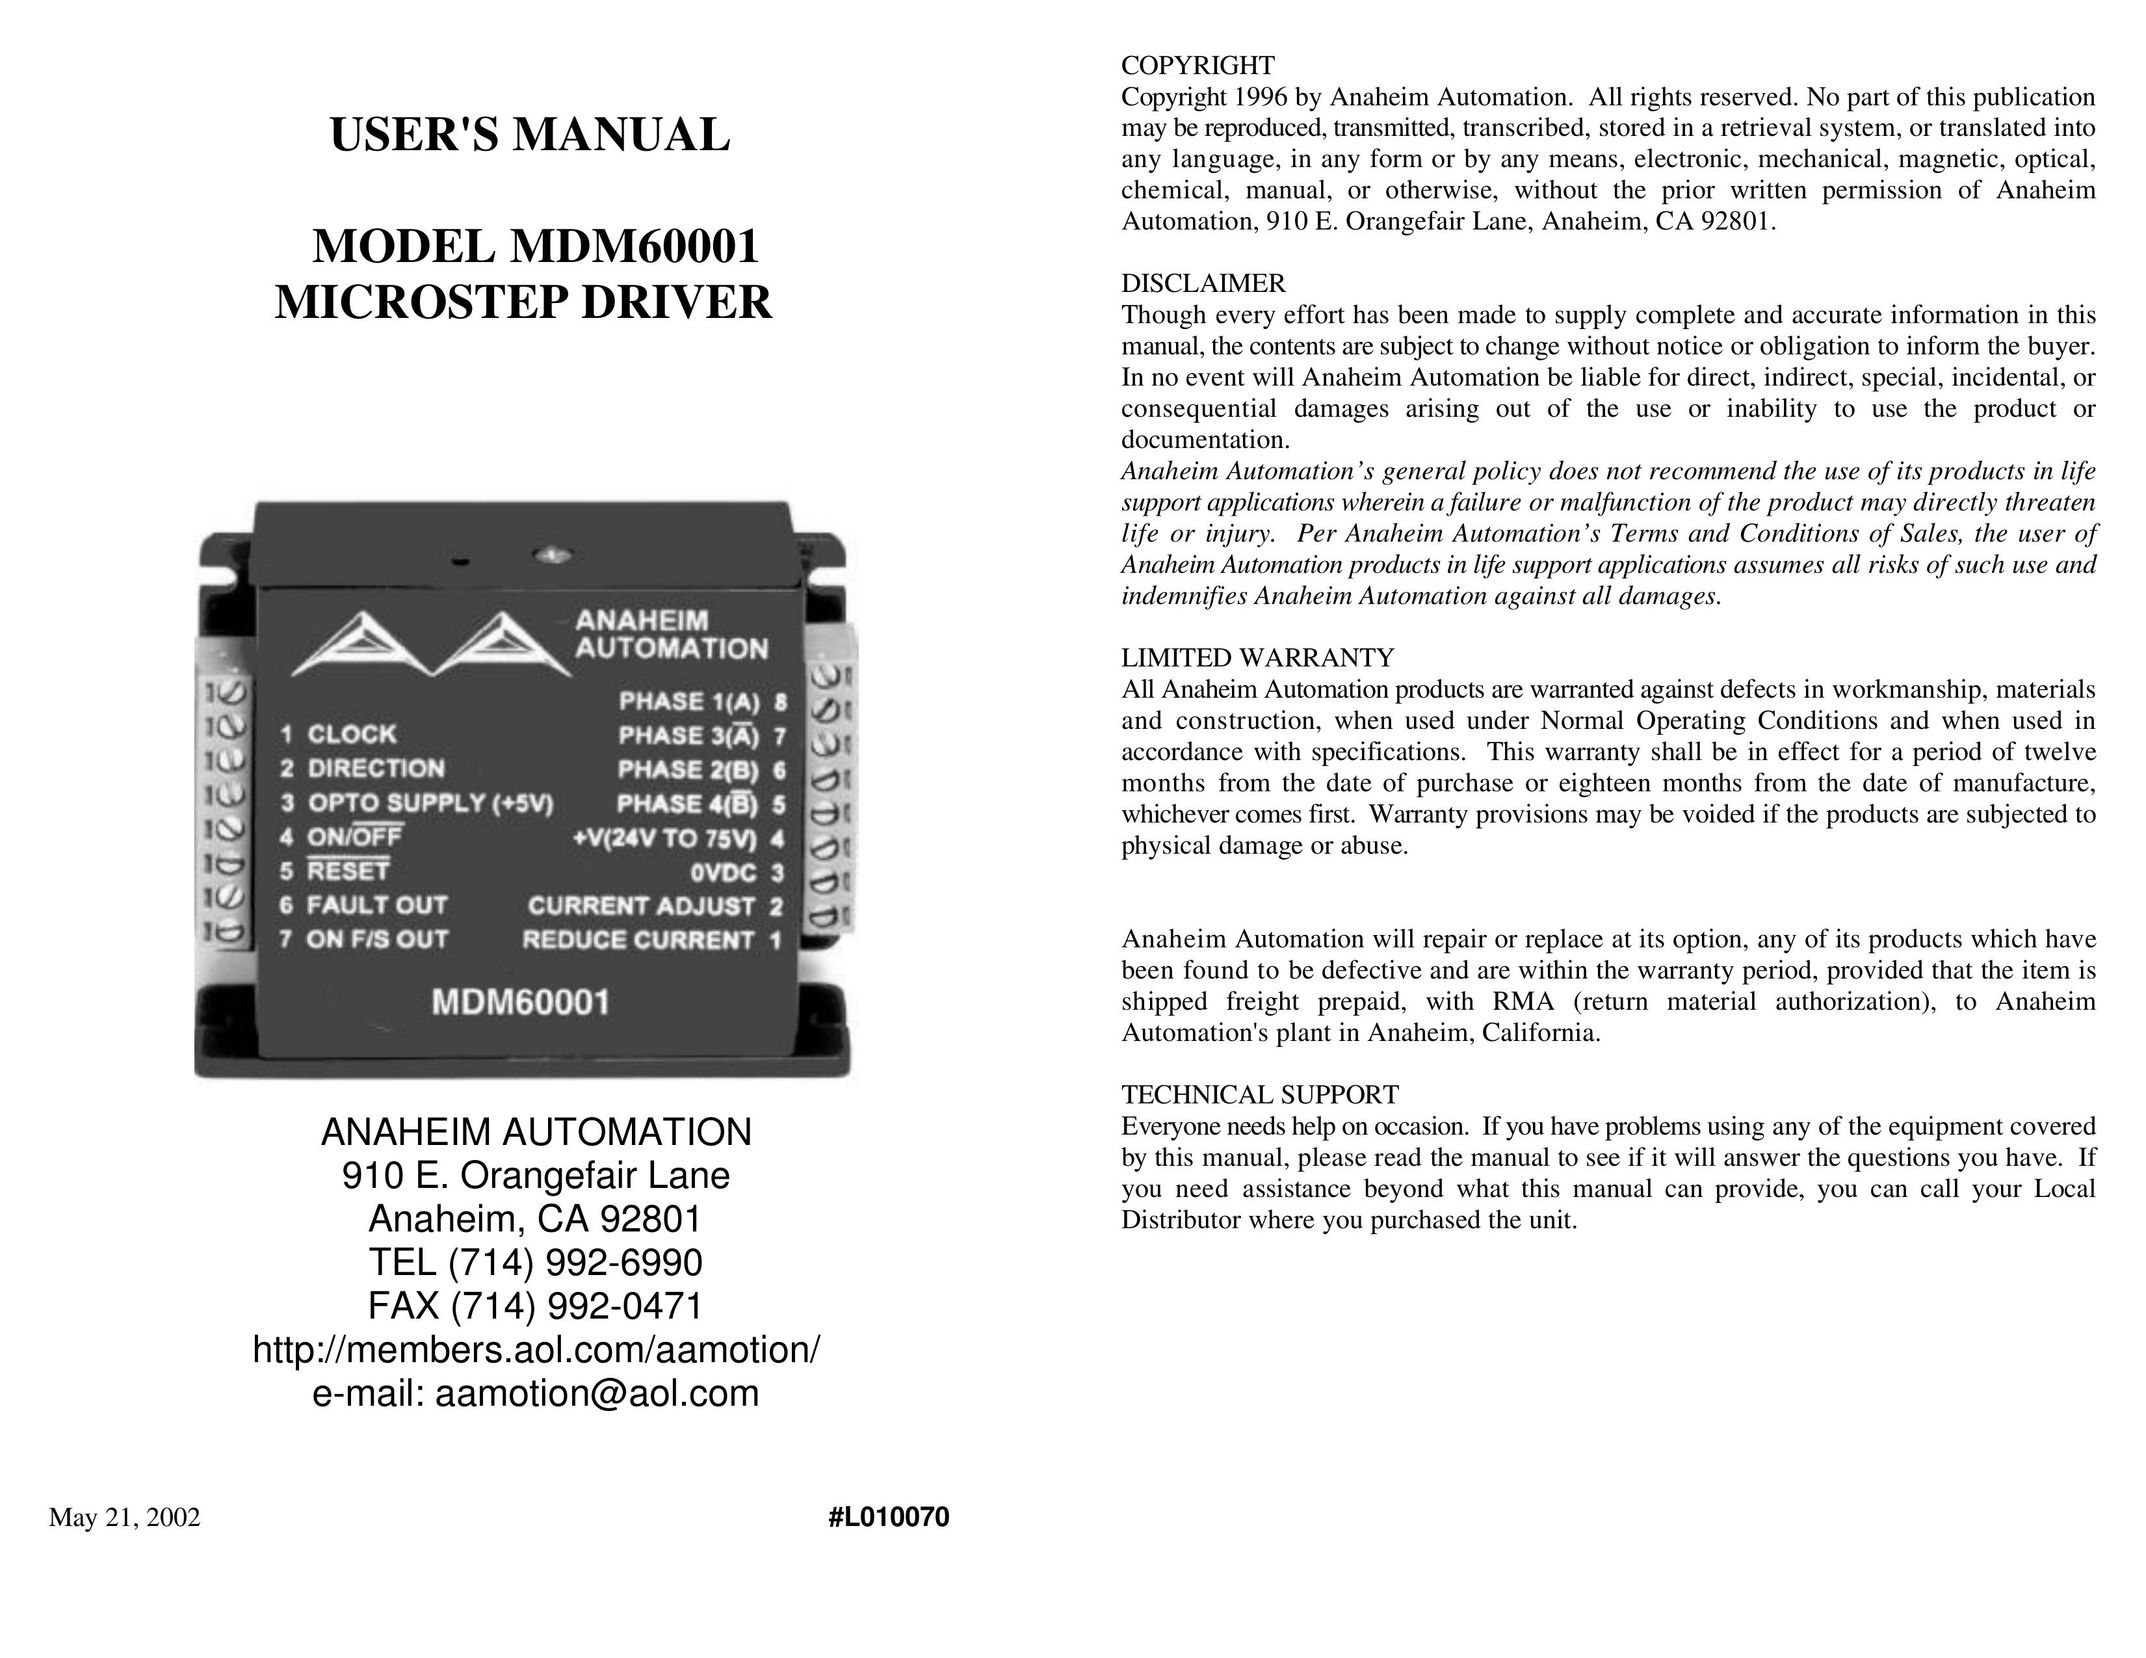 Anaheim MDM60001 Computer Drive User Manual